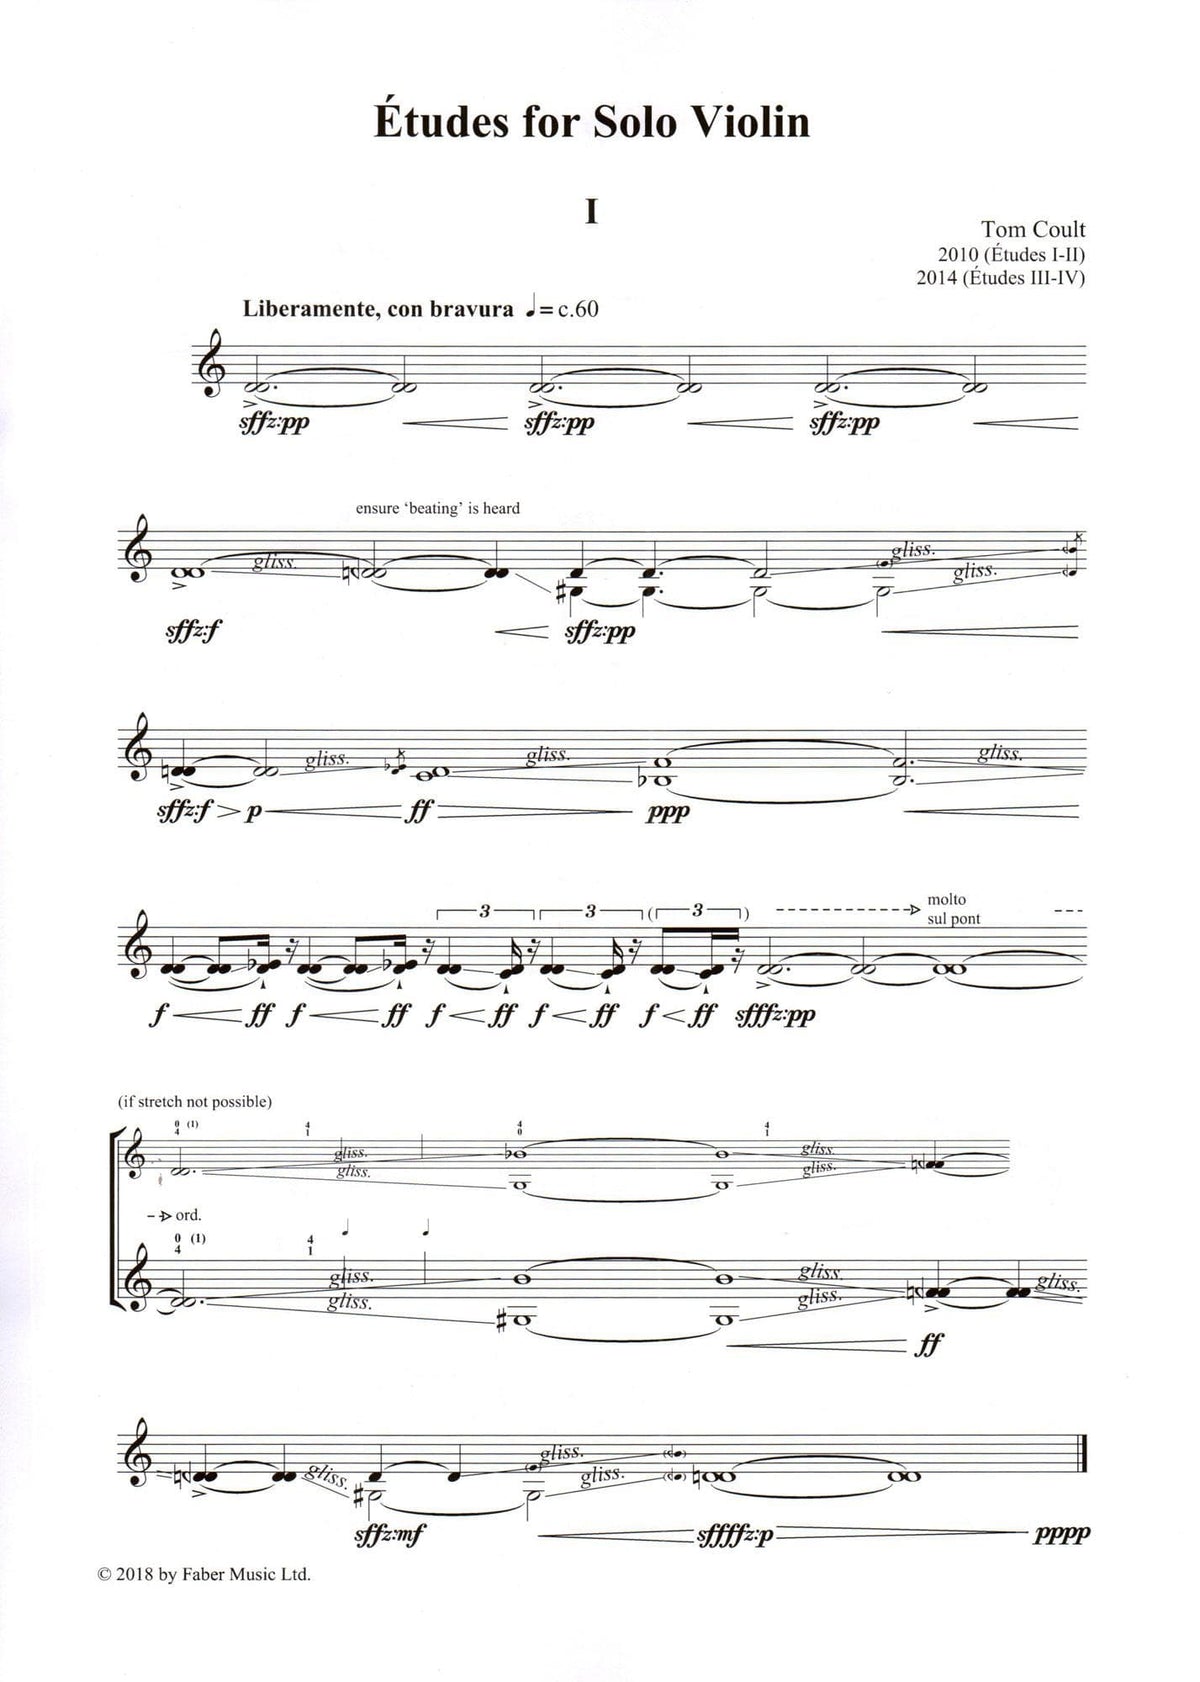 Coult, Tom - Etudes I-IV for Solo Violin - Faber Music Edition